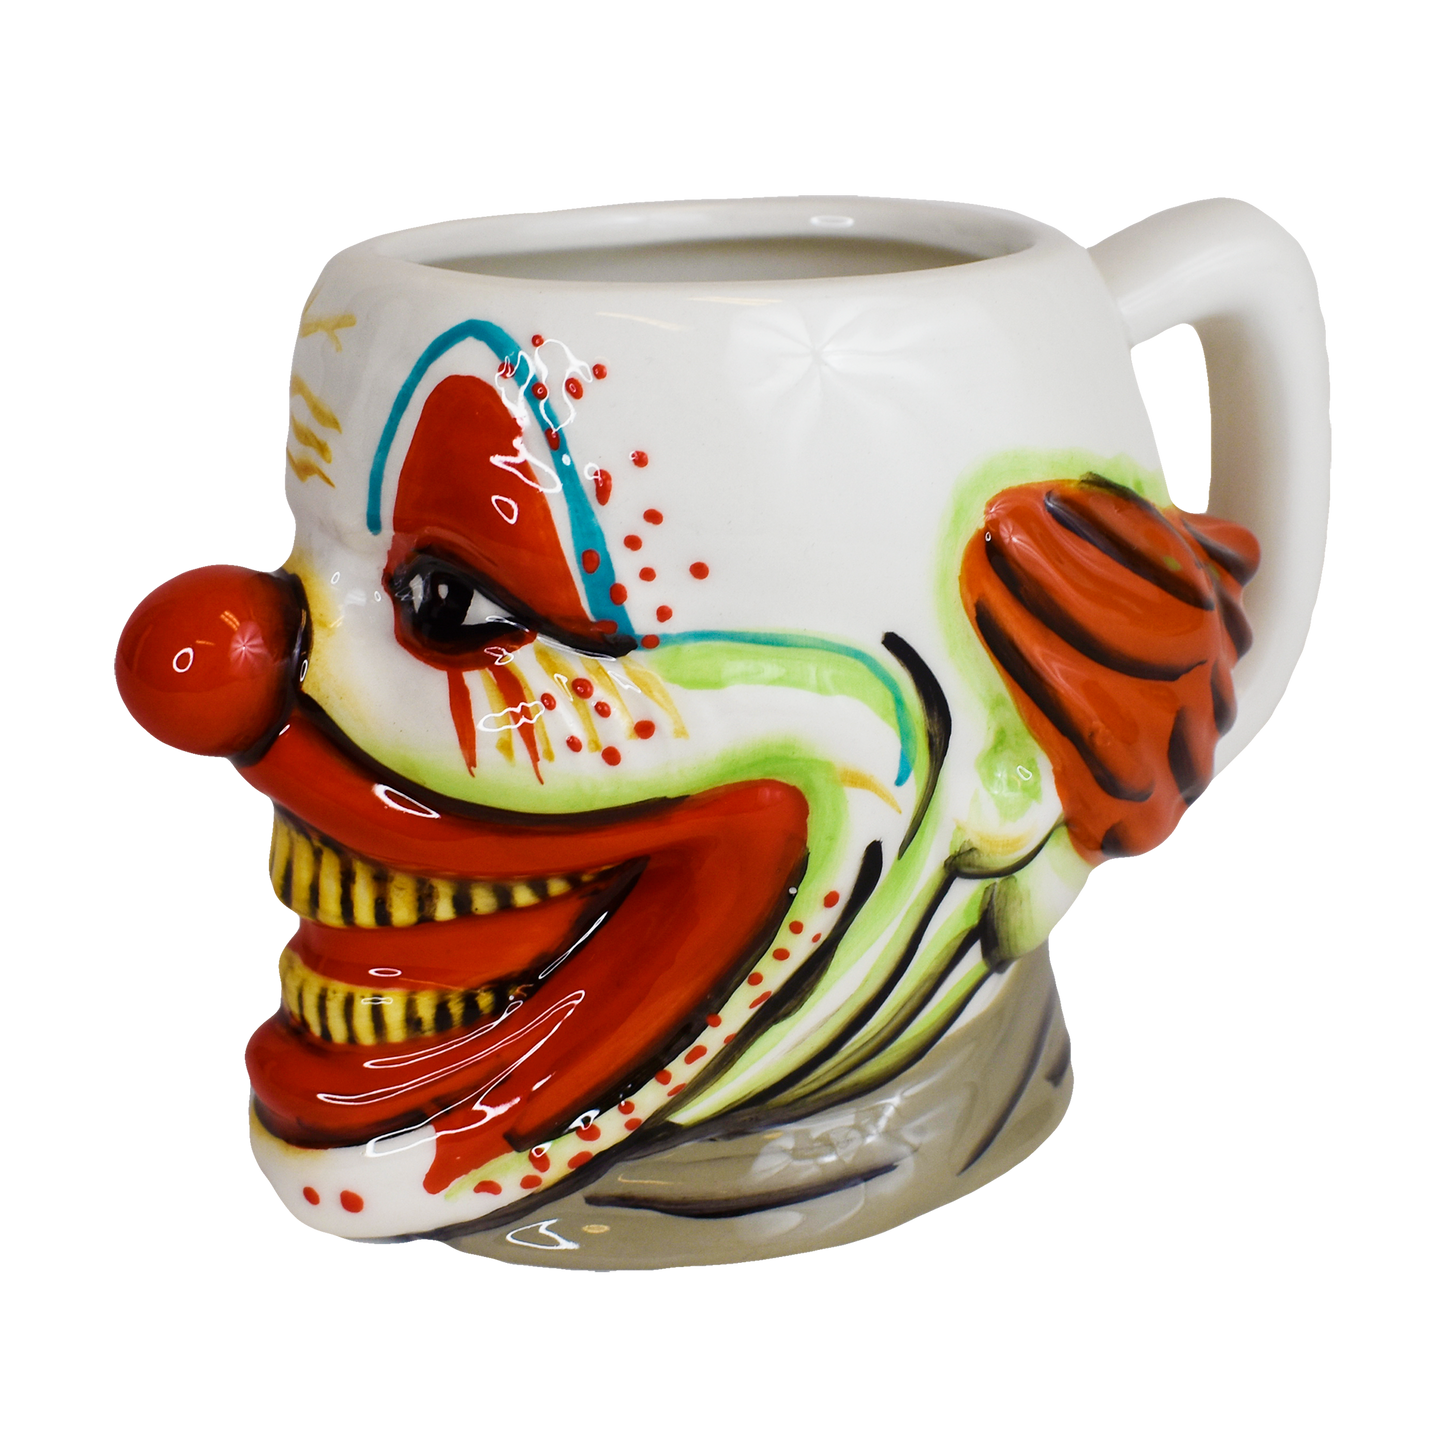 Clown Head Mug